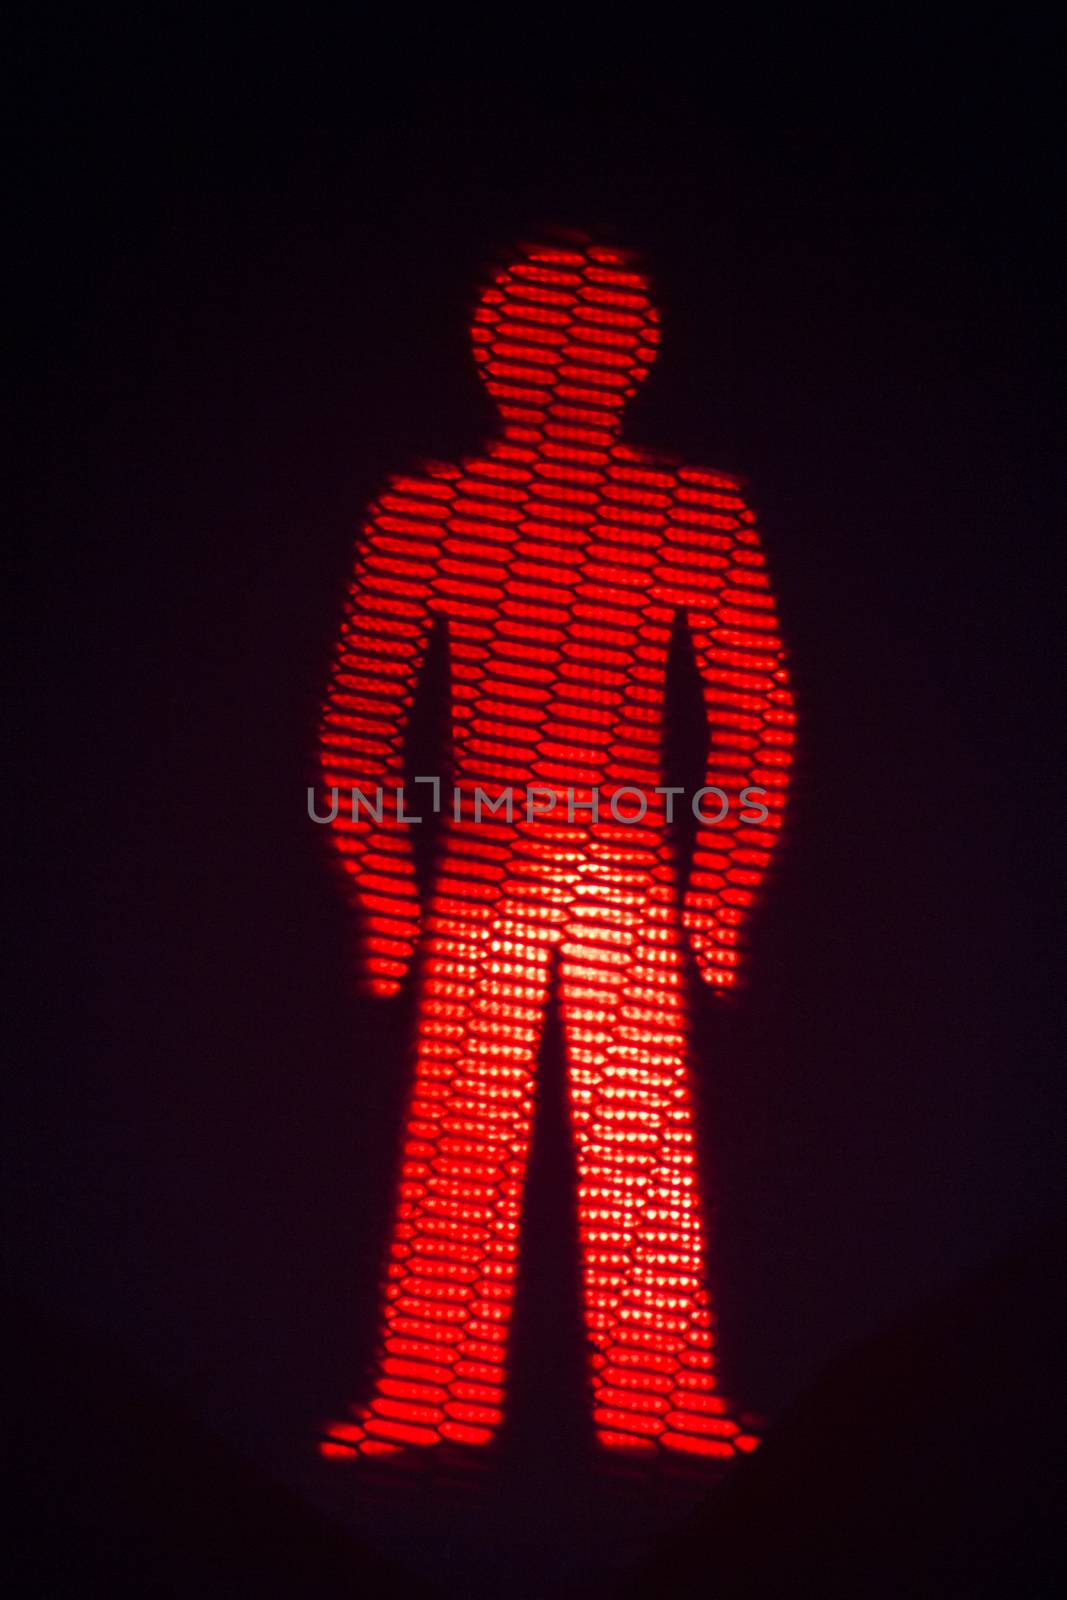 Red man pedestrian stop traffic light photo at night on black background.